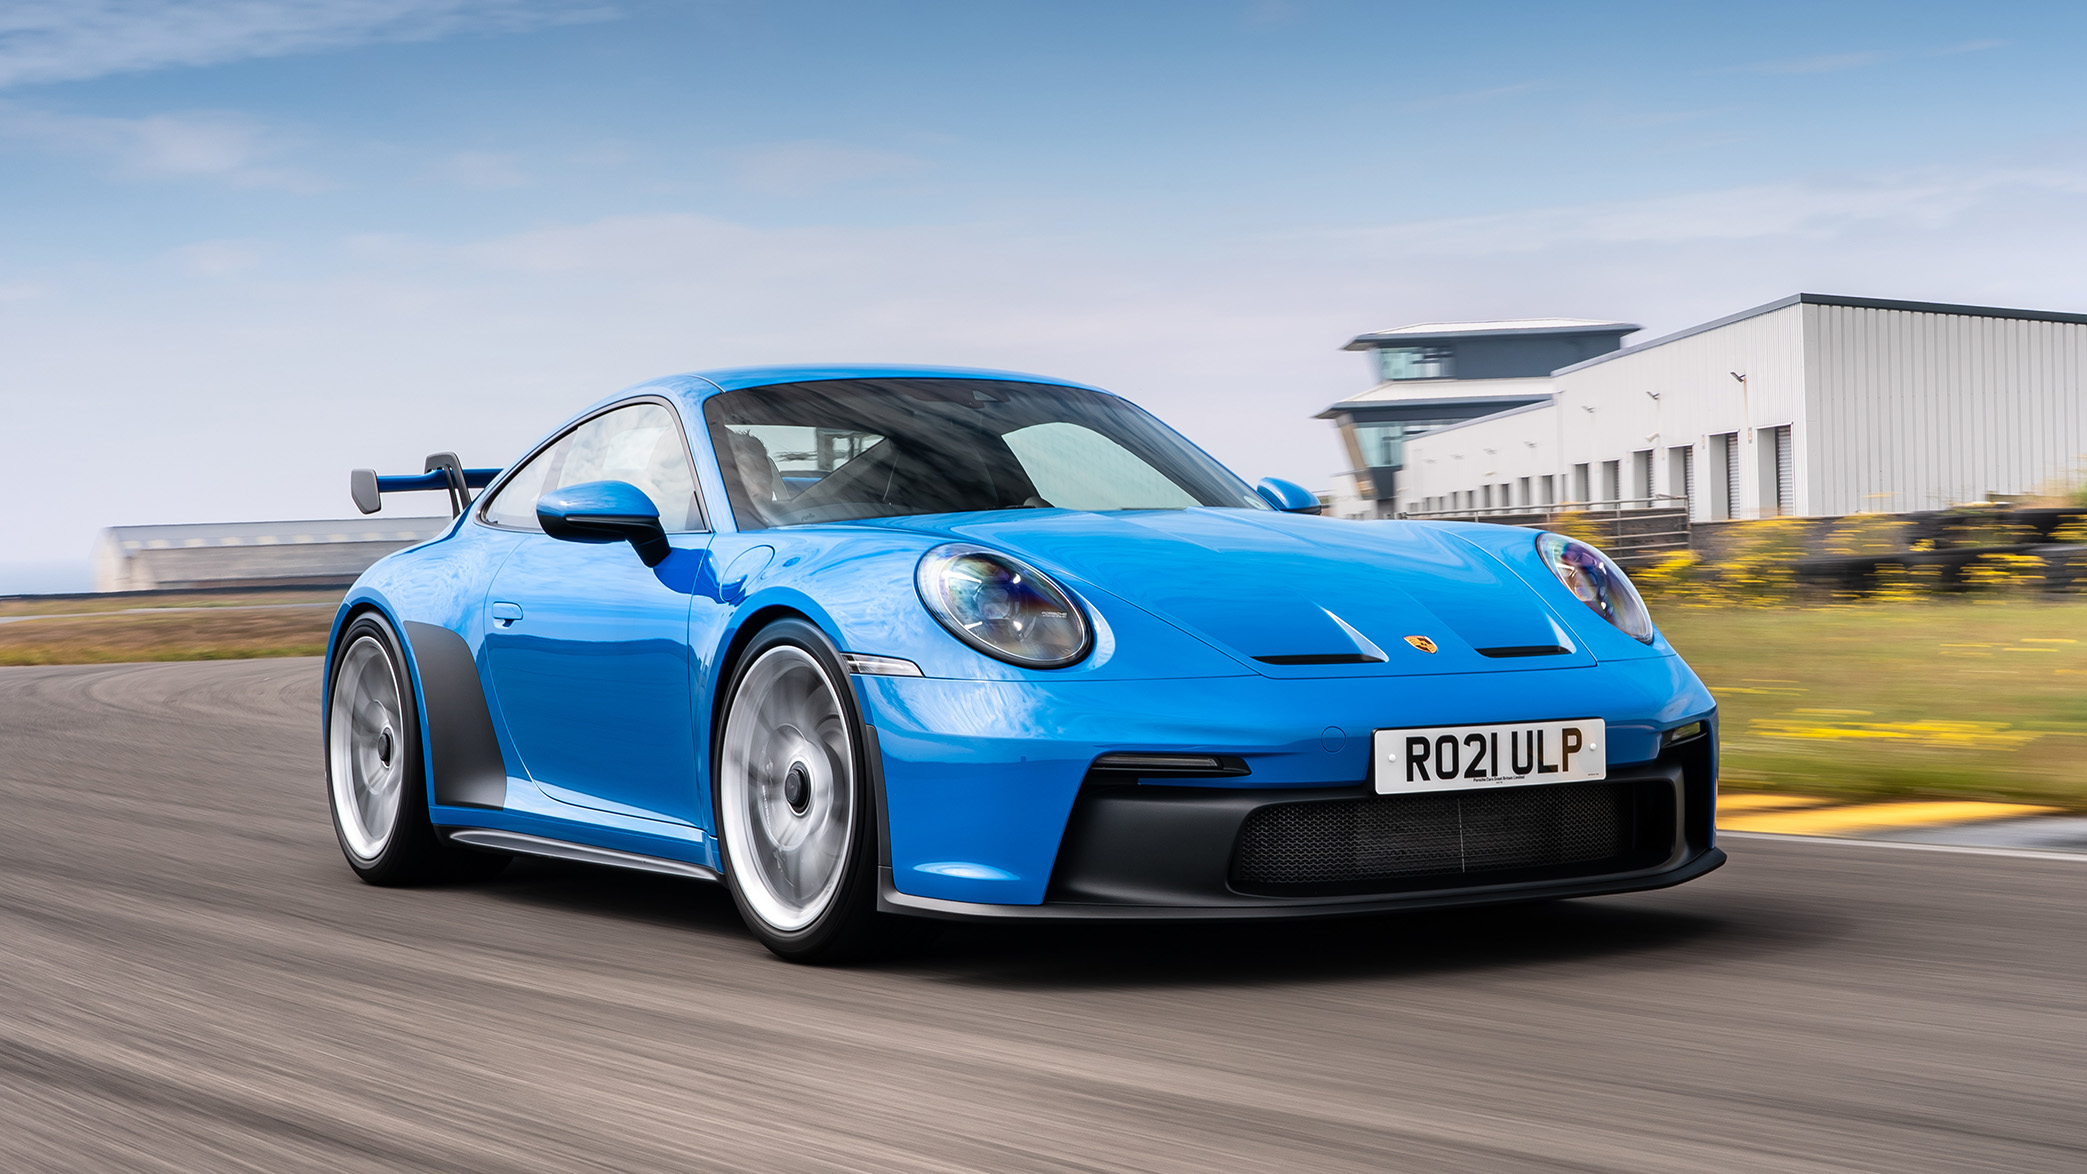 Porsche 911 GT3 Manual Review: Better With A Stick Shift? Reviews 2022